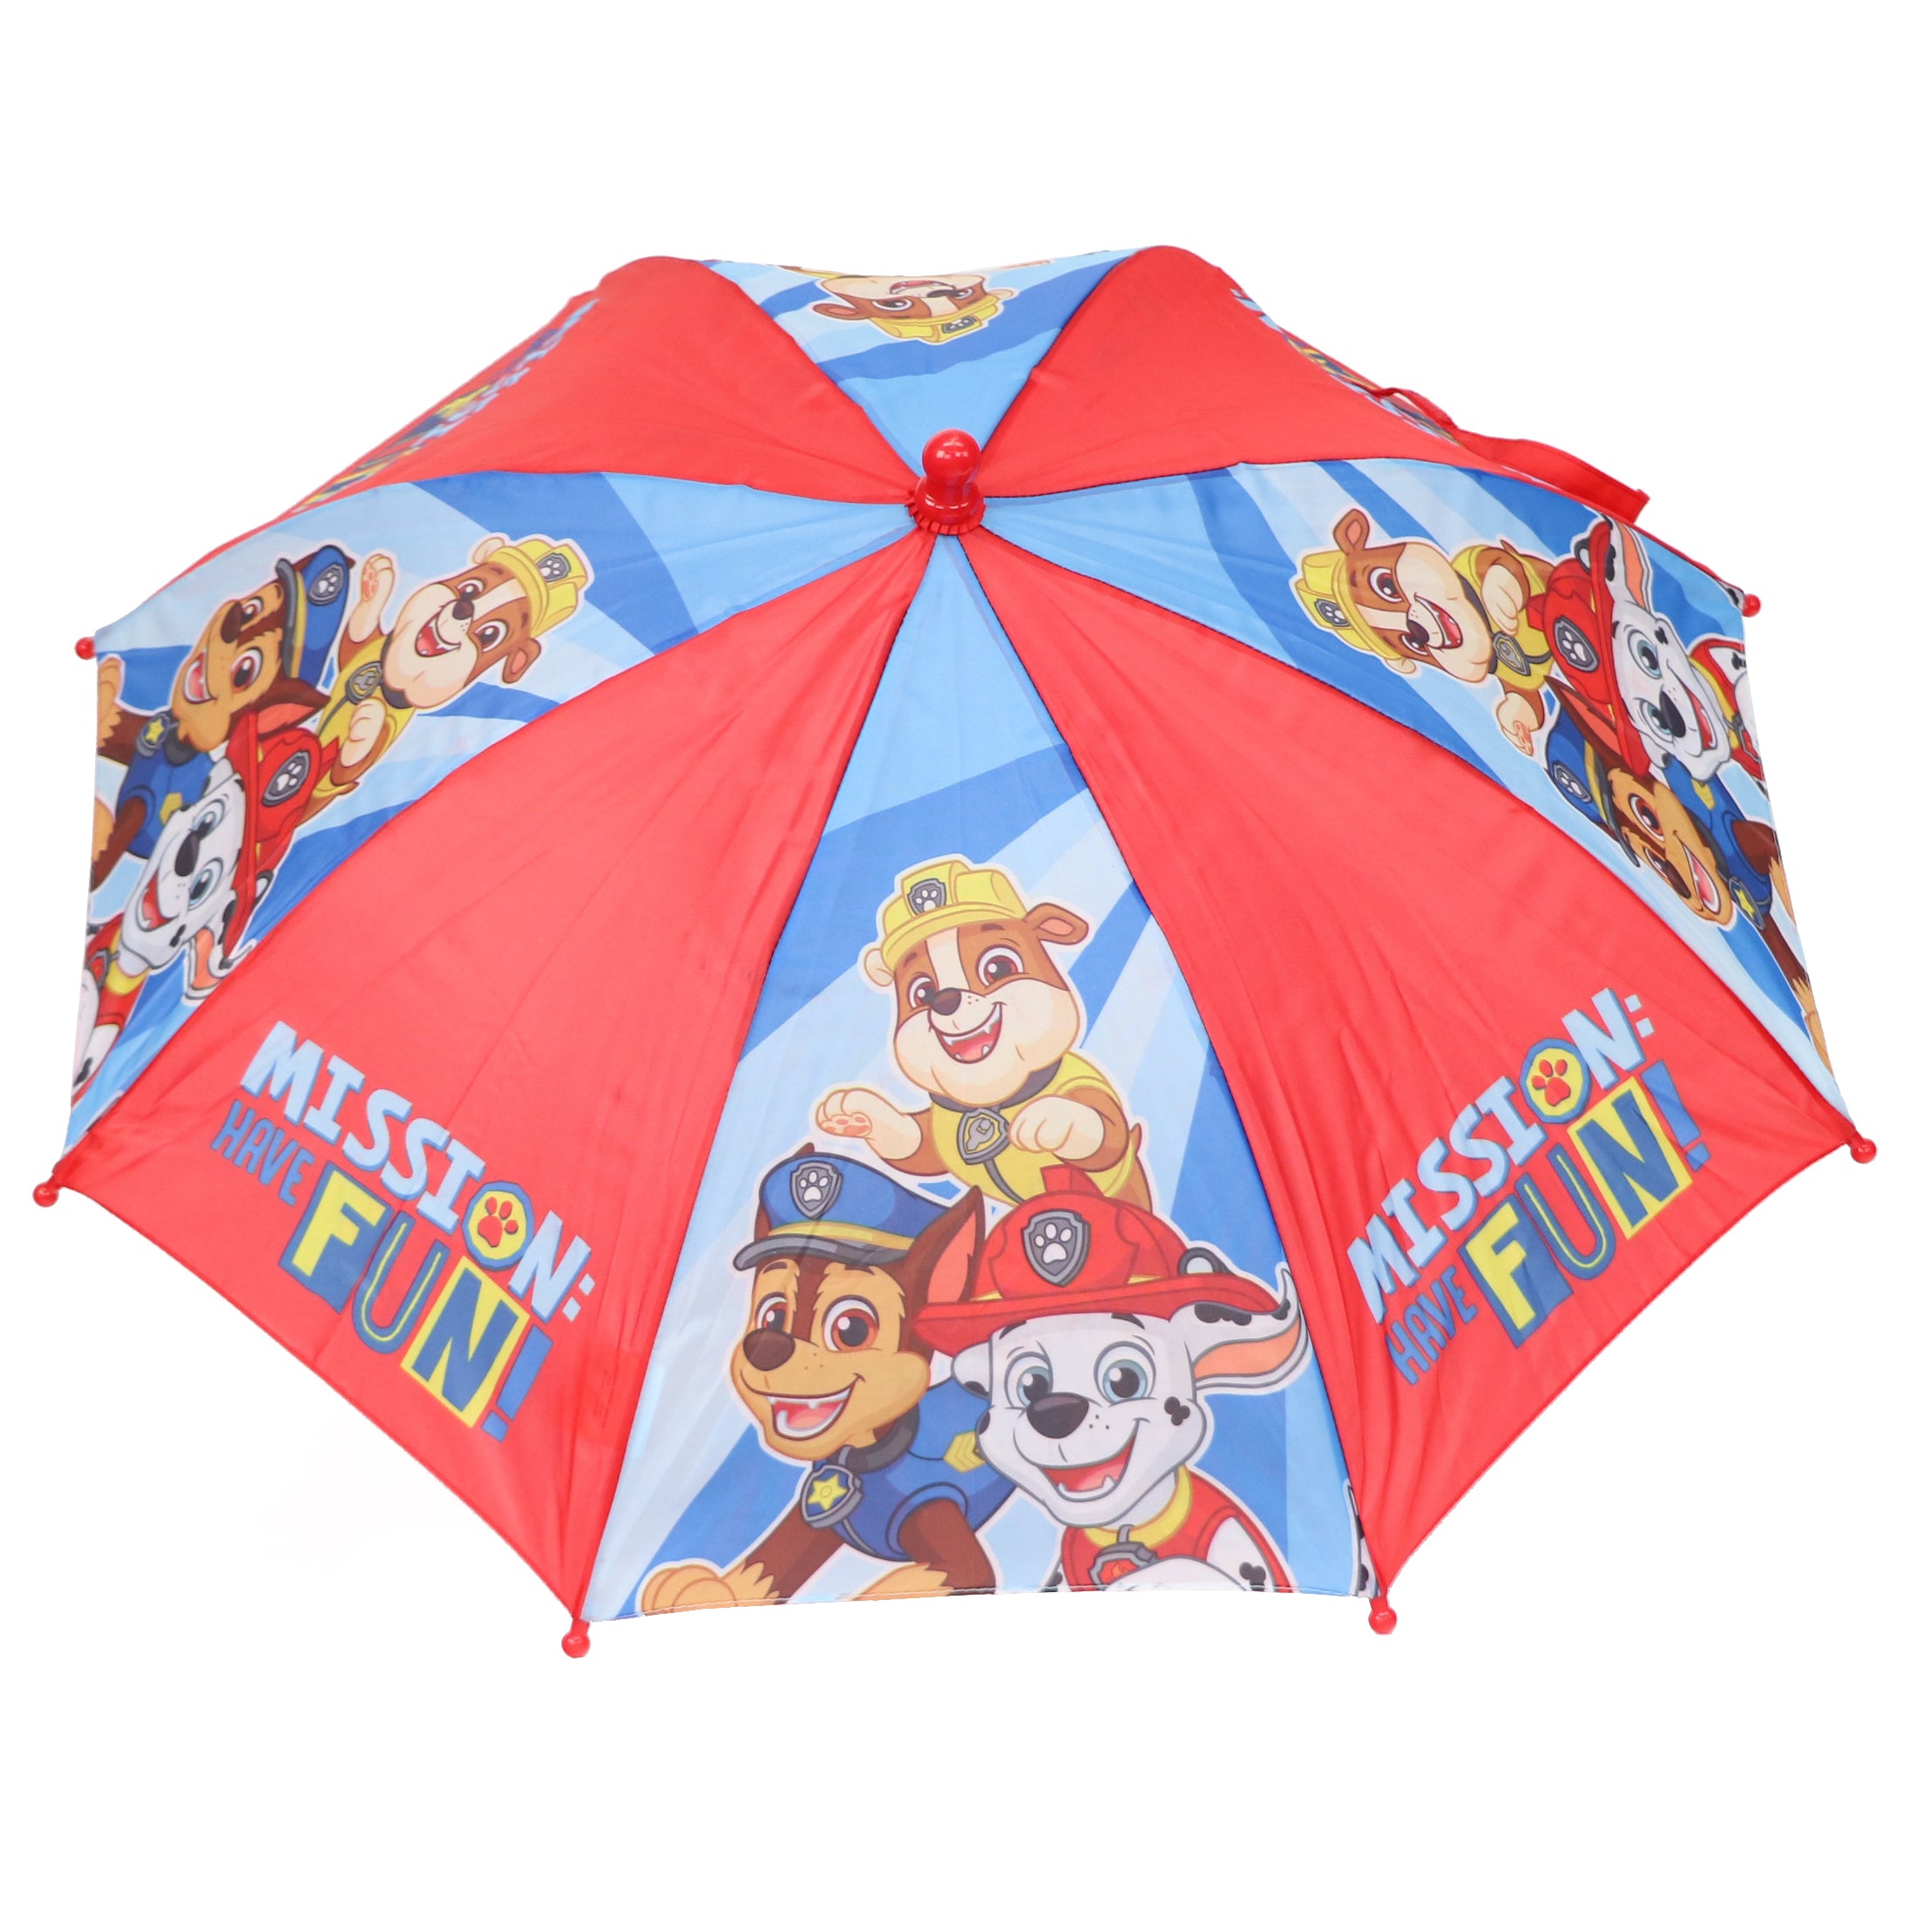 Nickelodeon Paw Patrol Mission: Have Fun Umbrella